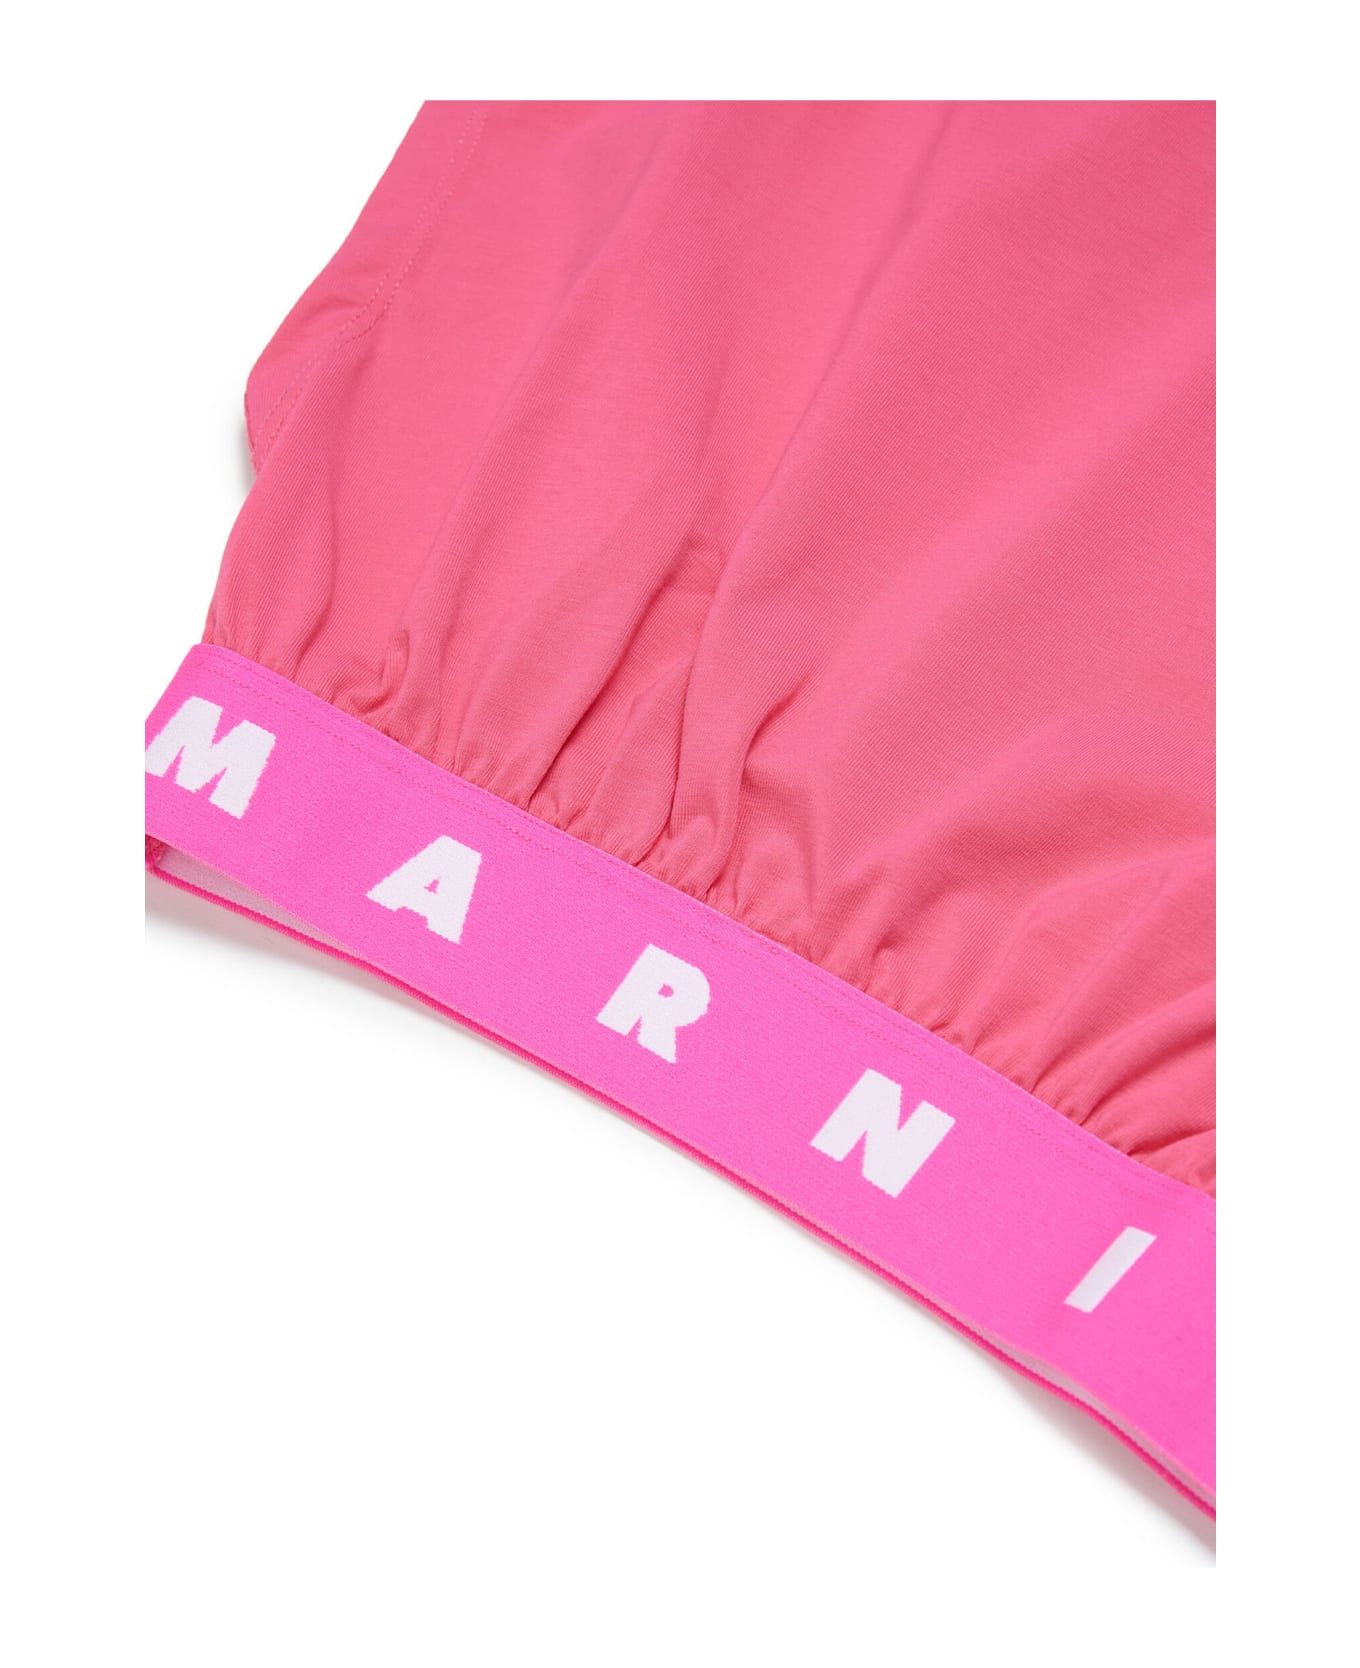 Marni Mt208f T-shirt Marni Fuchsia Low-sleeved Jersey T-shirt With Logo-printed Elastic Band - Bright fuxya